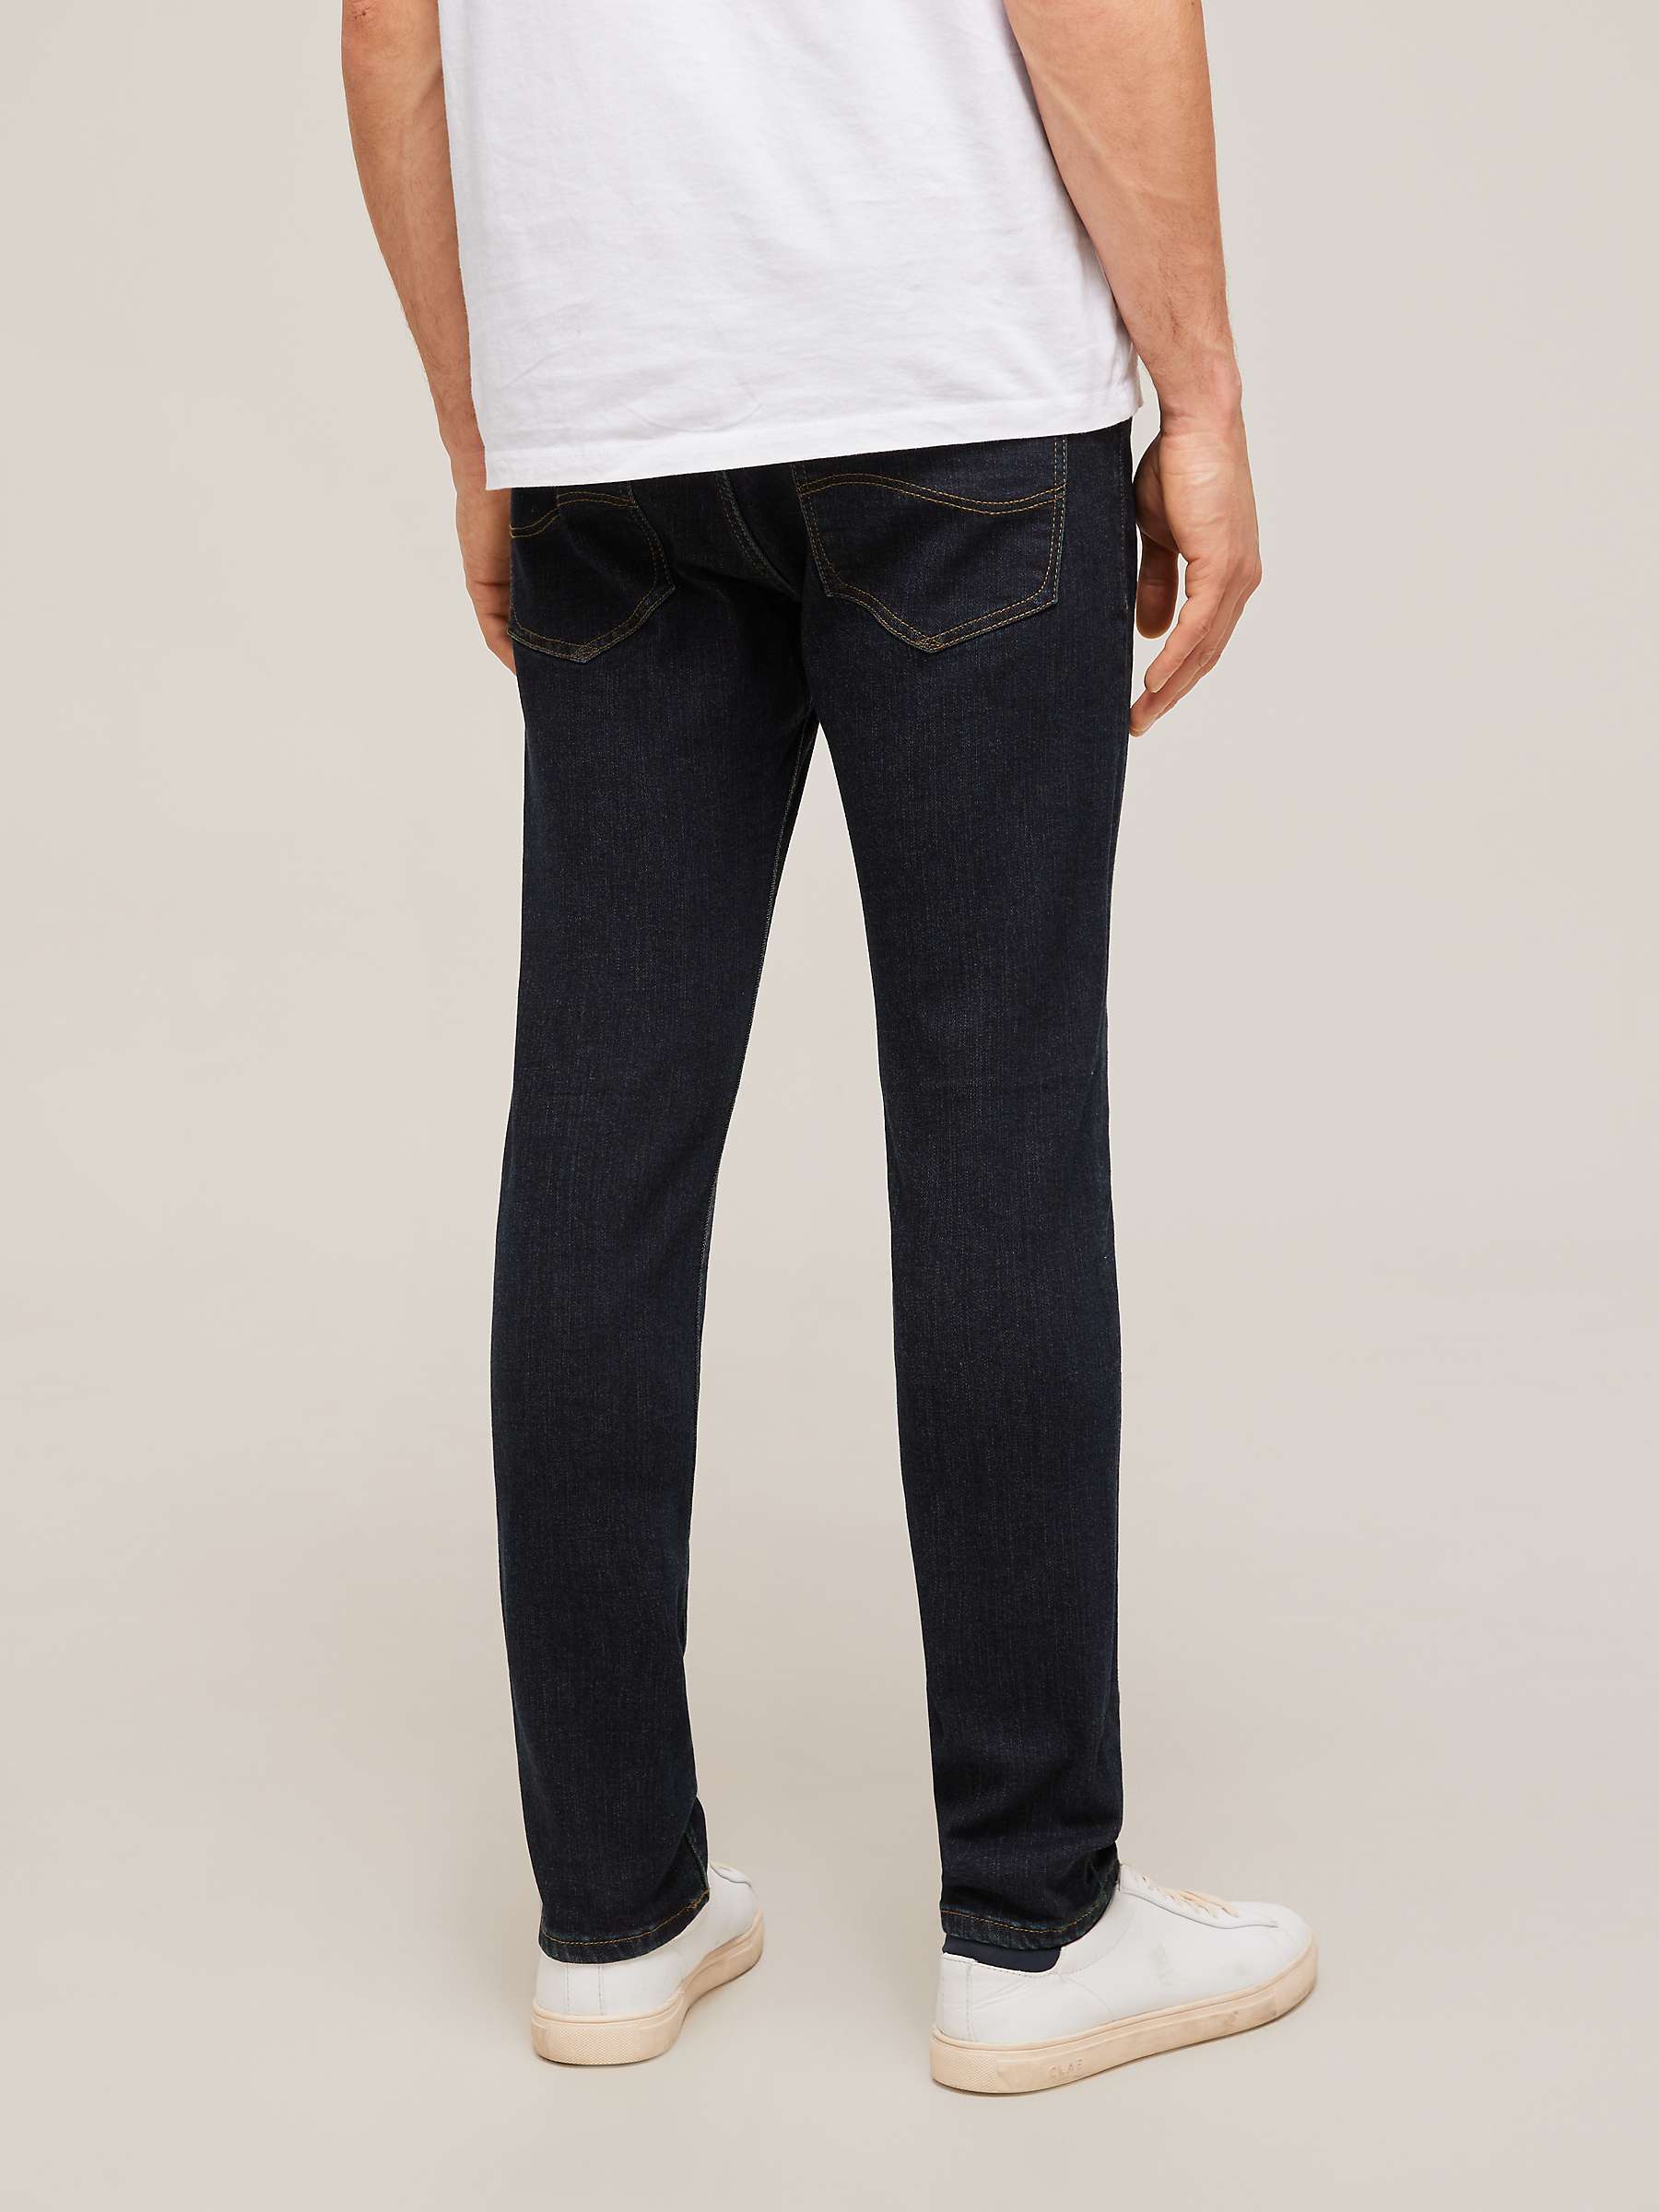 Lee Wanderer Slim Jeans, Navy at John Lewis & Partners